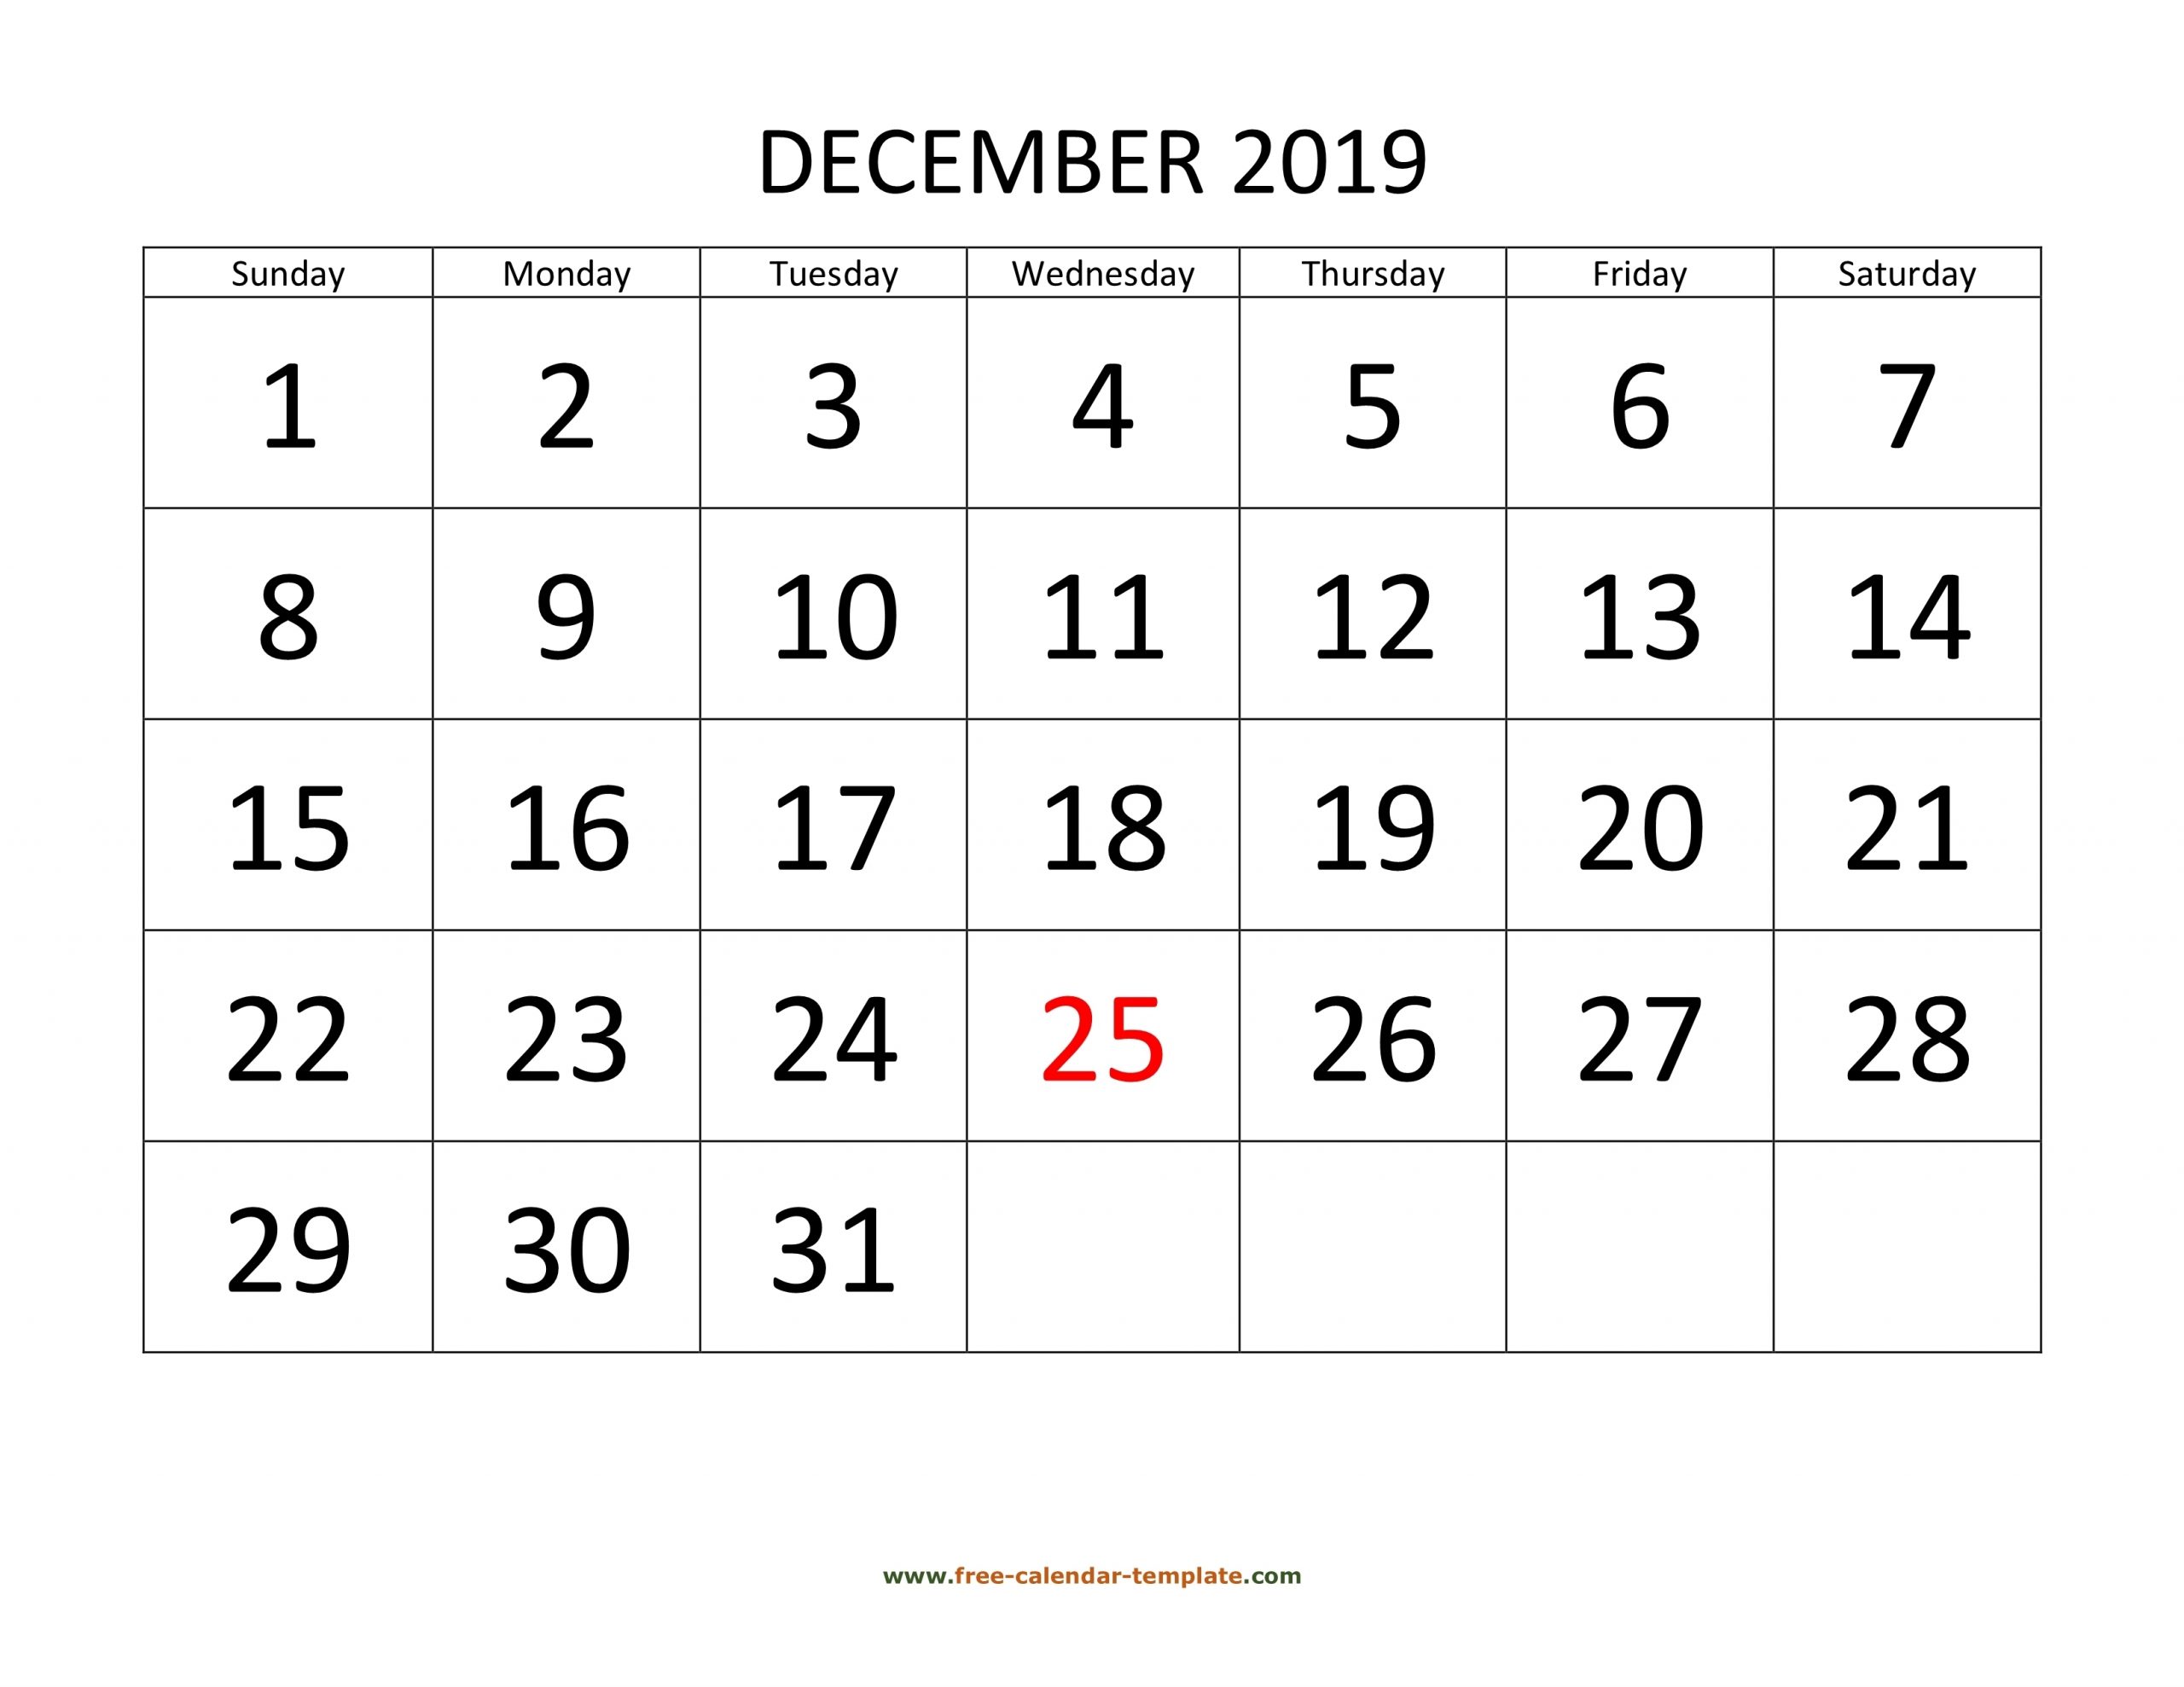 December 2019 Free Calendar Tempplate | Free-Calendar with regard to Free 2019 Calendar With Space To Write